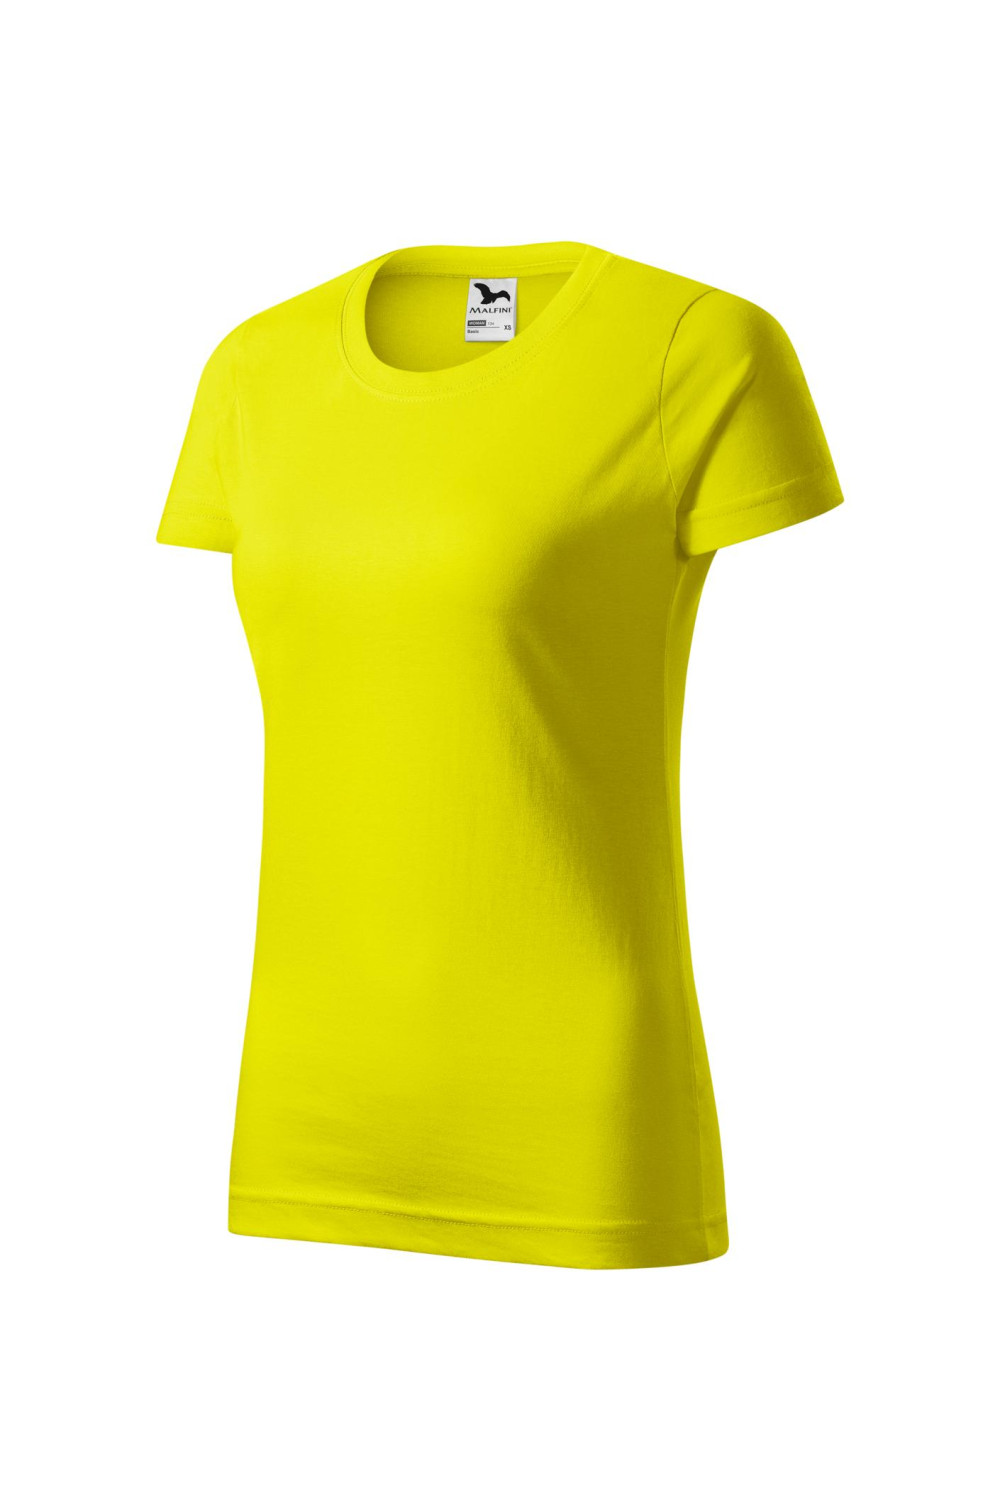 BASIC 134 MALFINI Koszulka damska 100% bawełna t-shirt cytrynowy